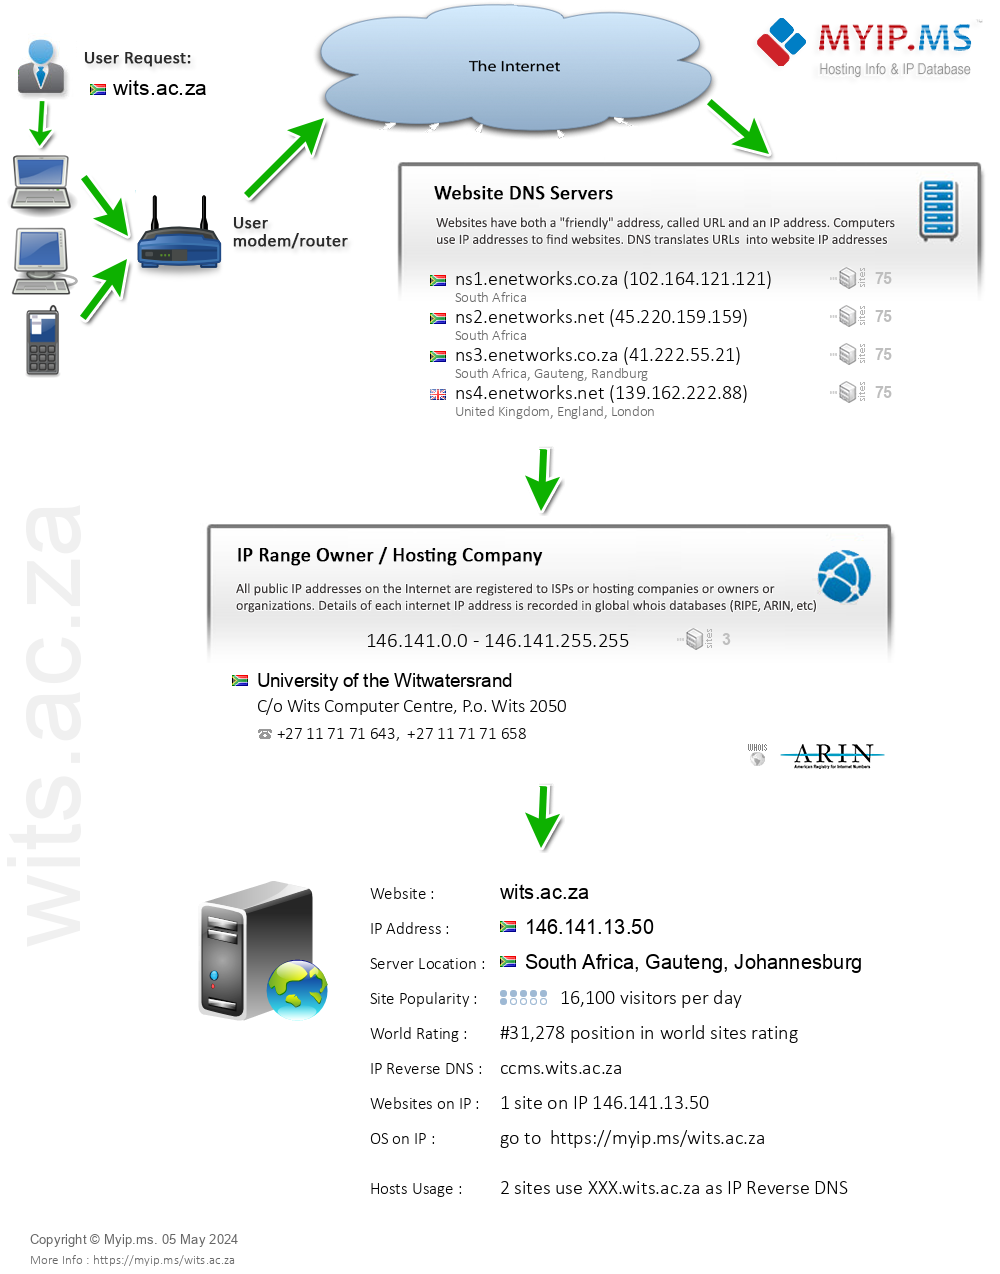 Wits.ac.za - Website Hosting Visual IP Diagram